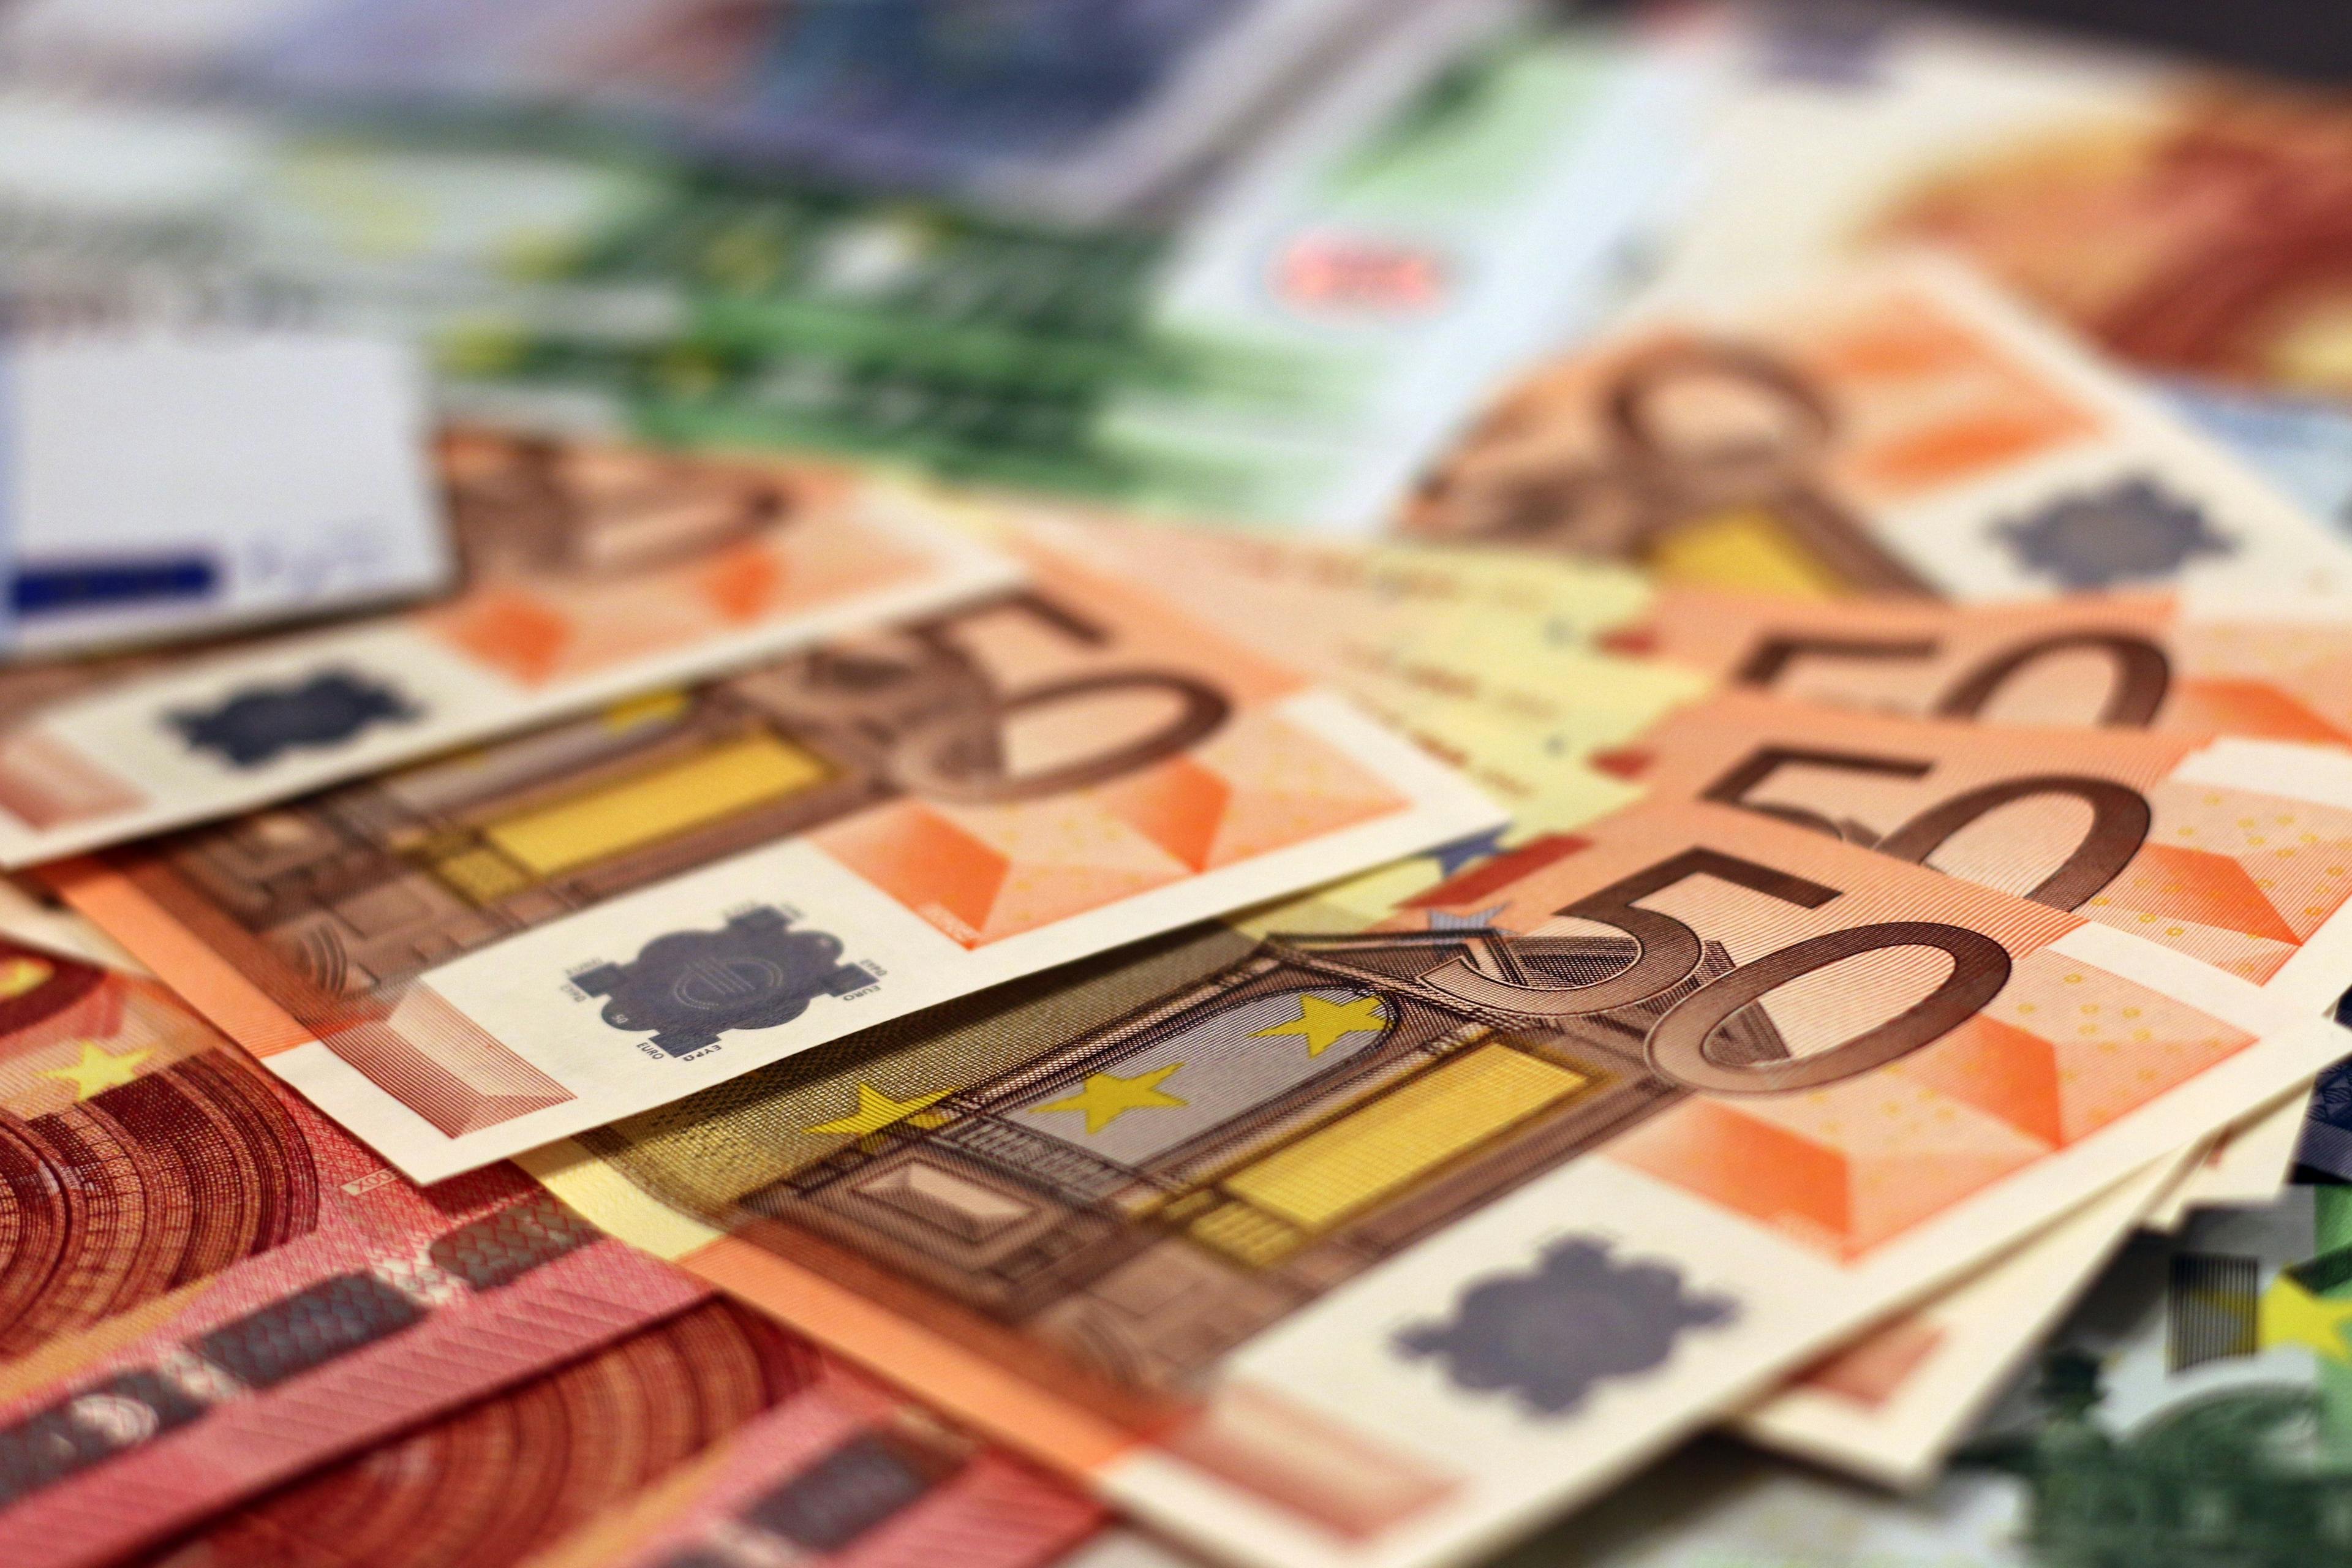 Euros, money, bills